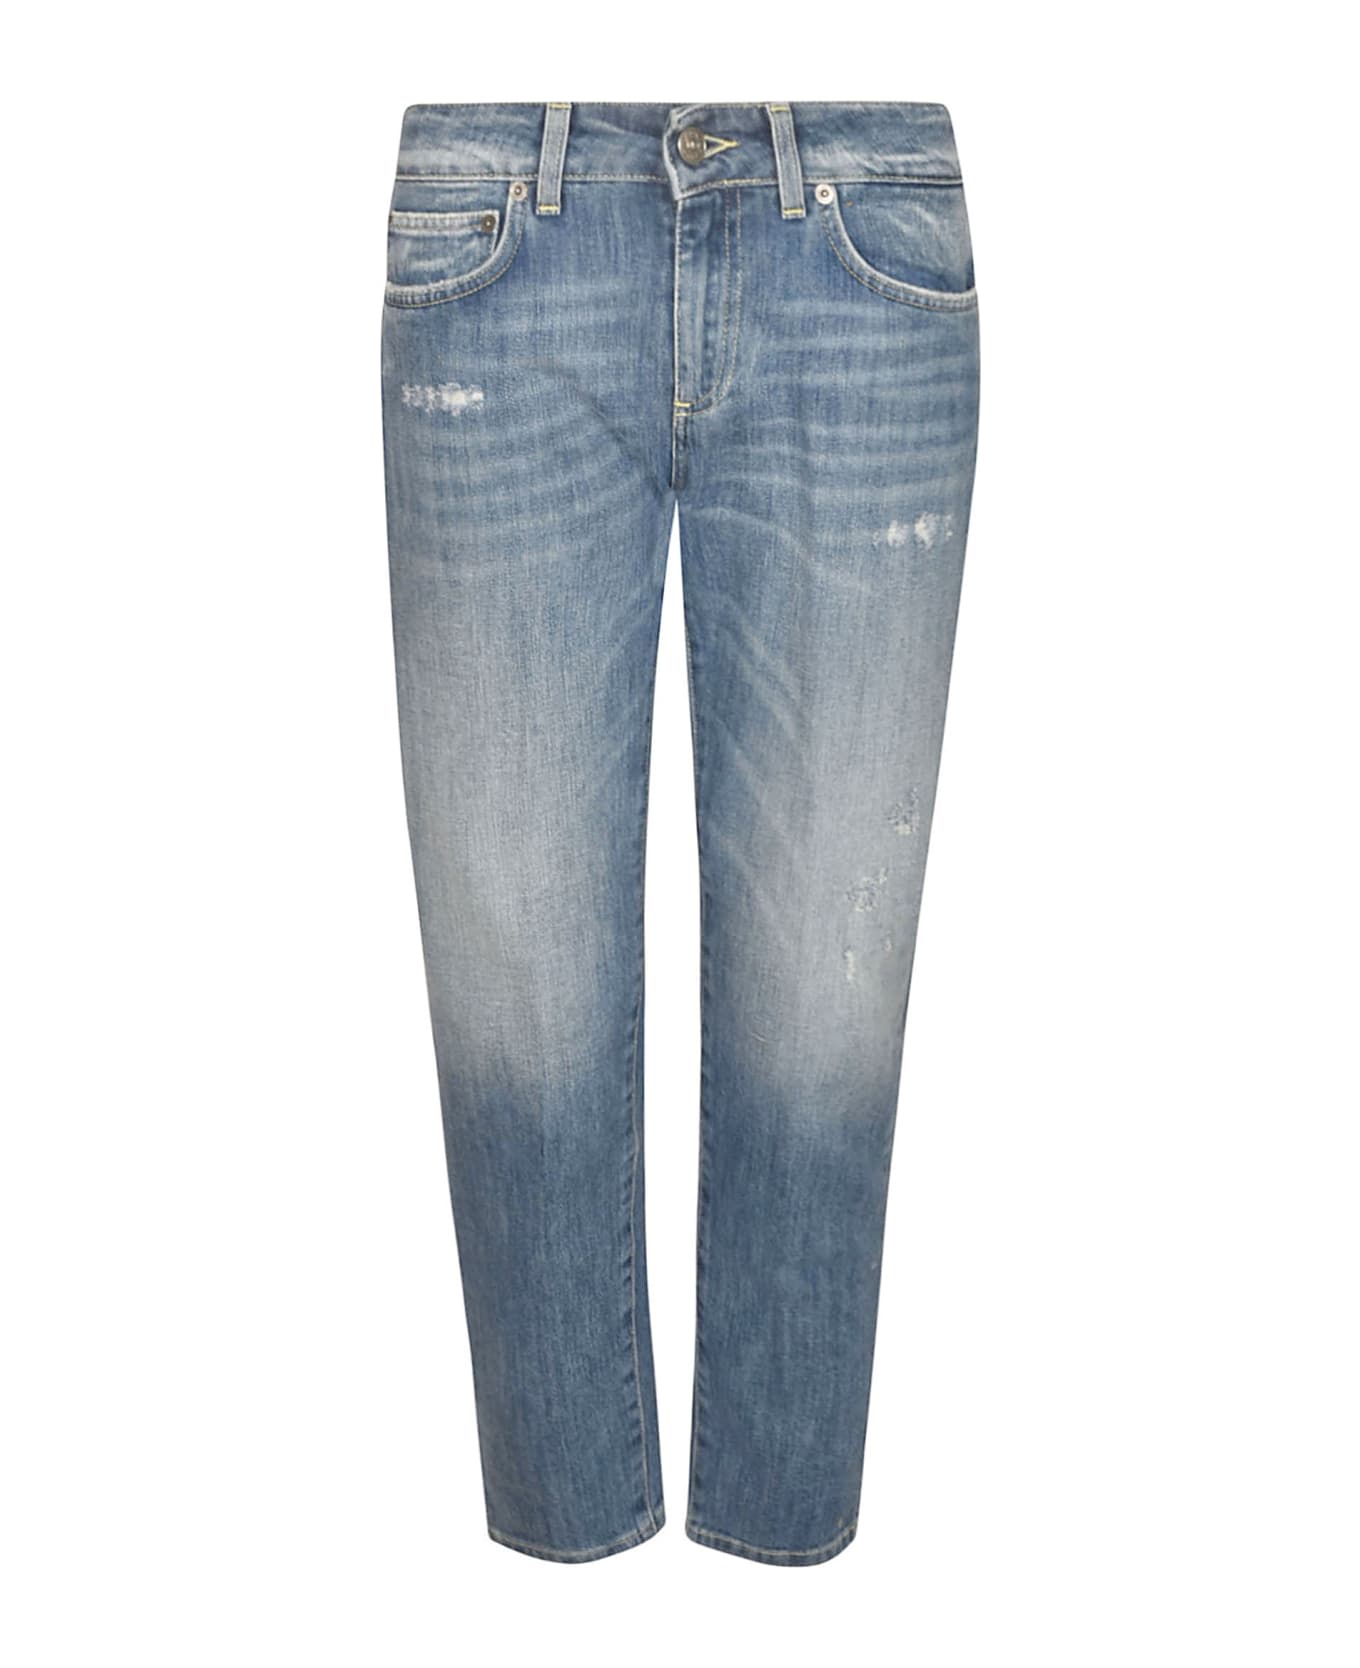 Dondup Semi Distressed Jeans - 800 デニム